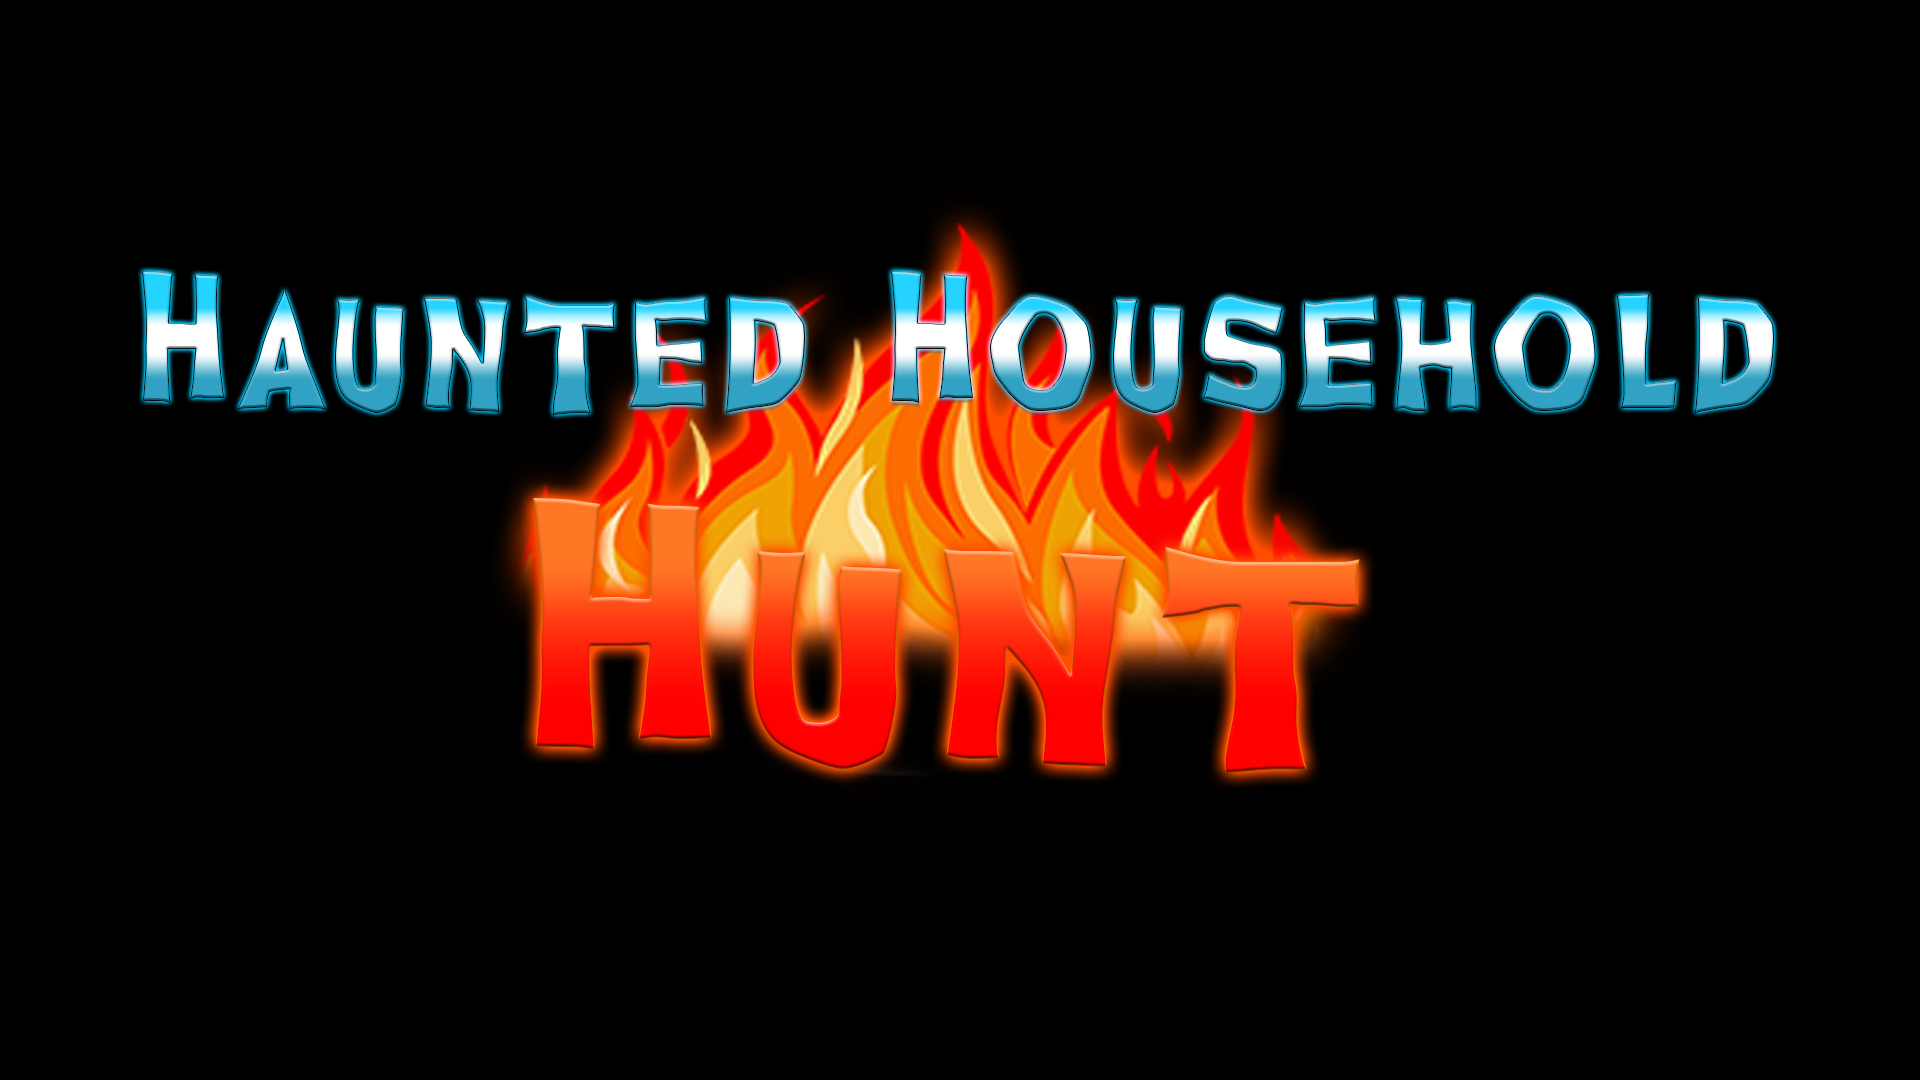 Haunted Household Hunt